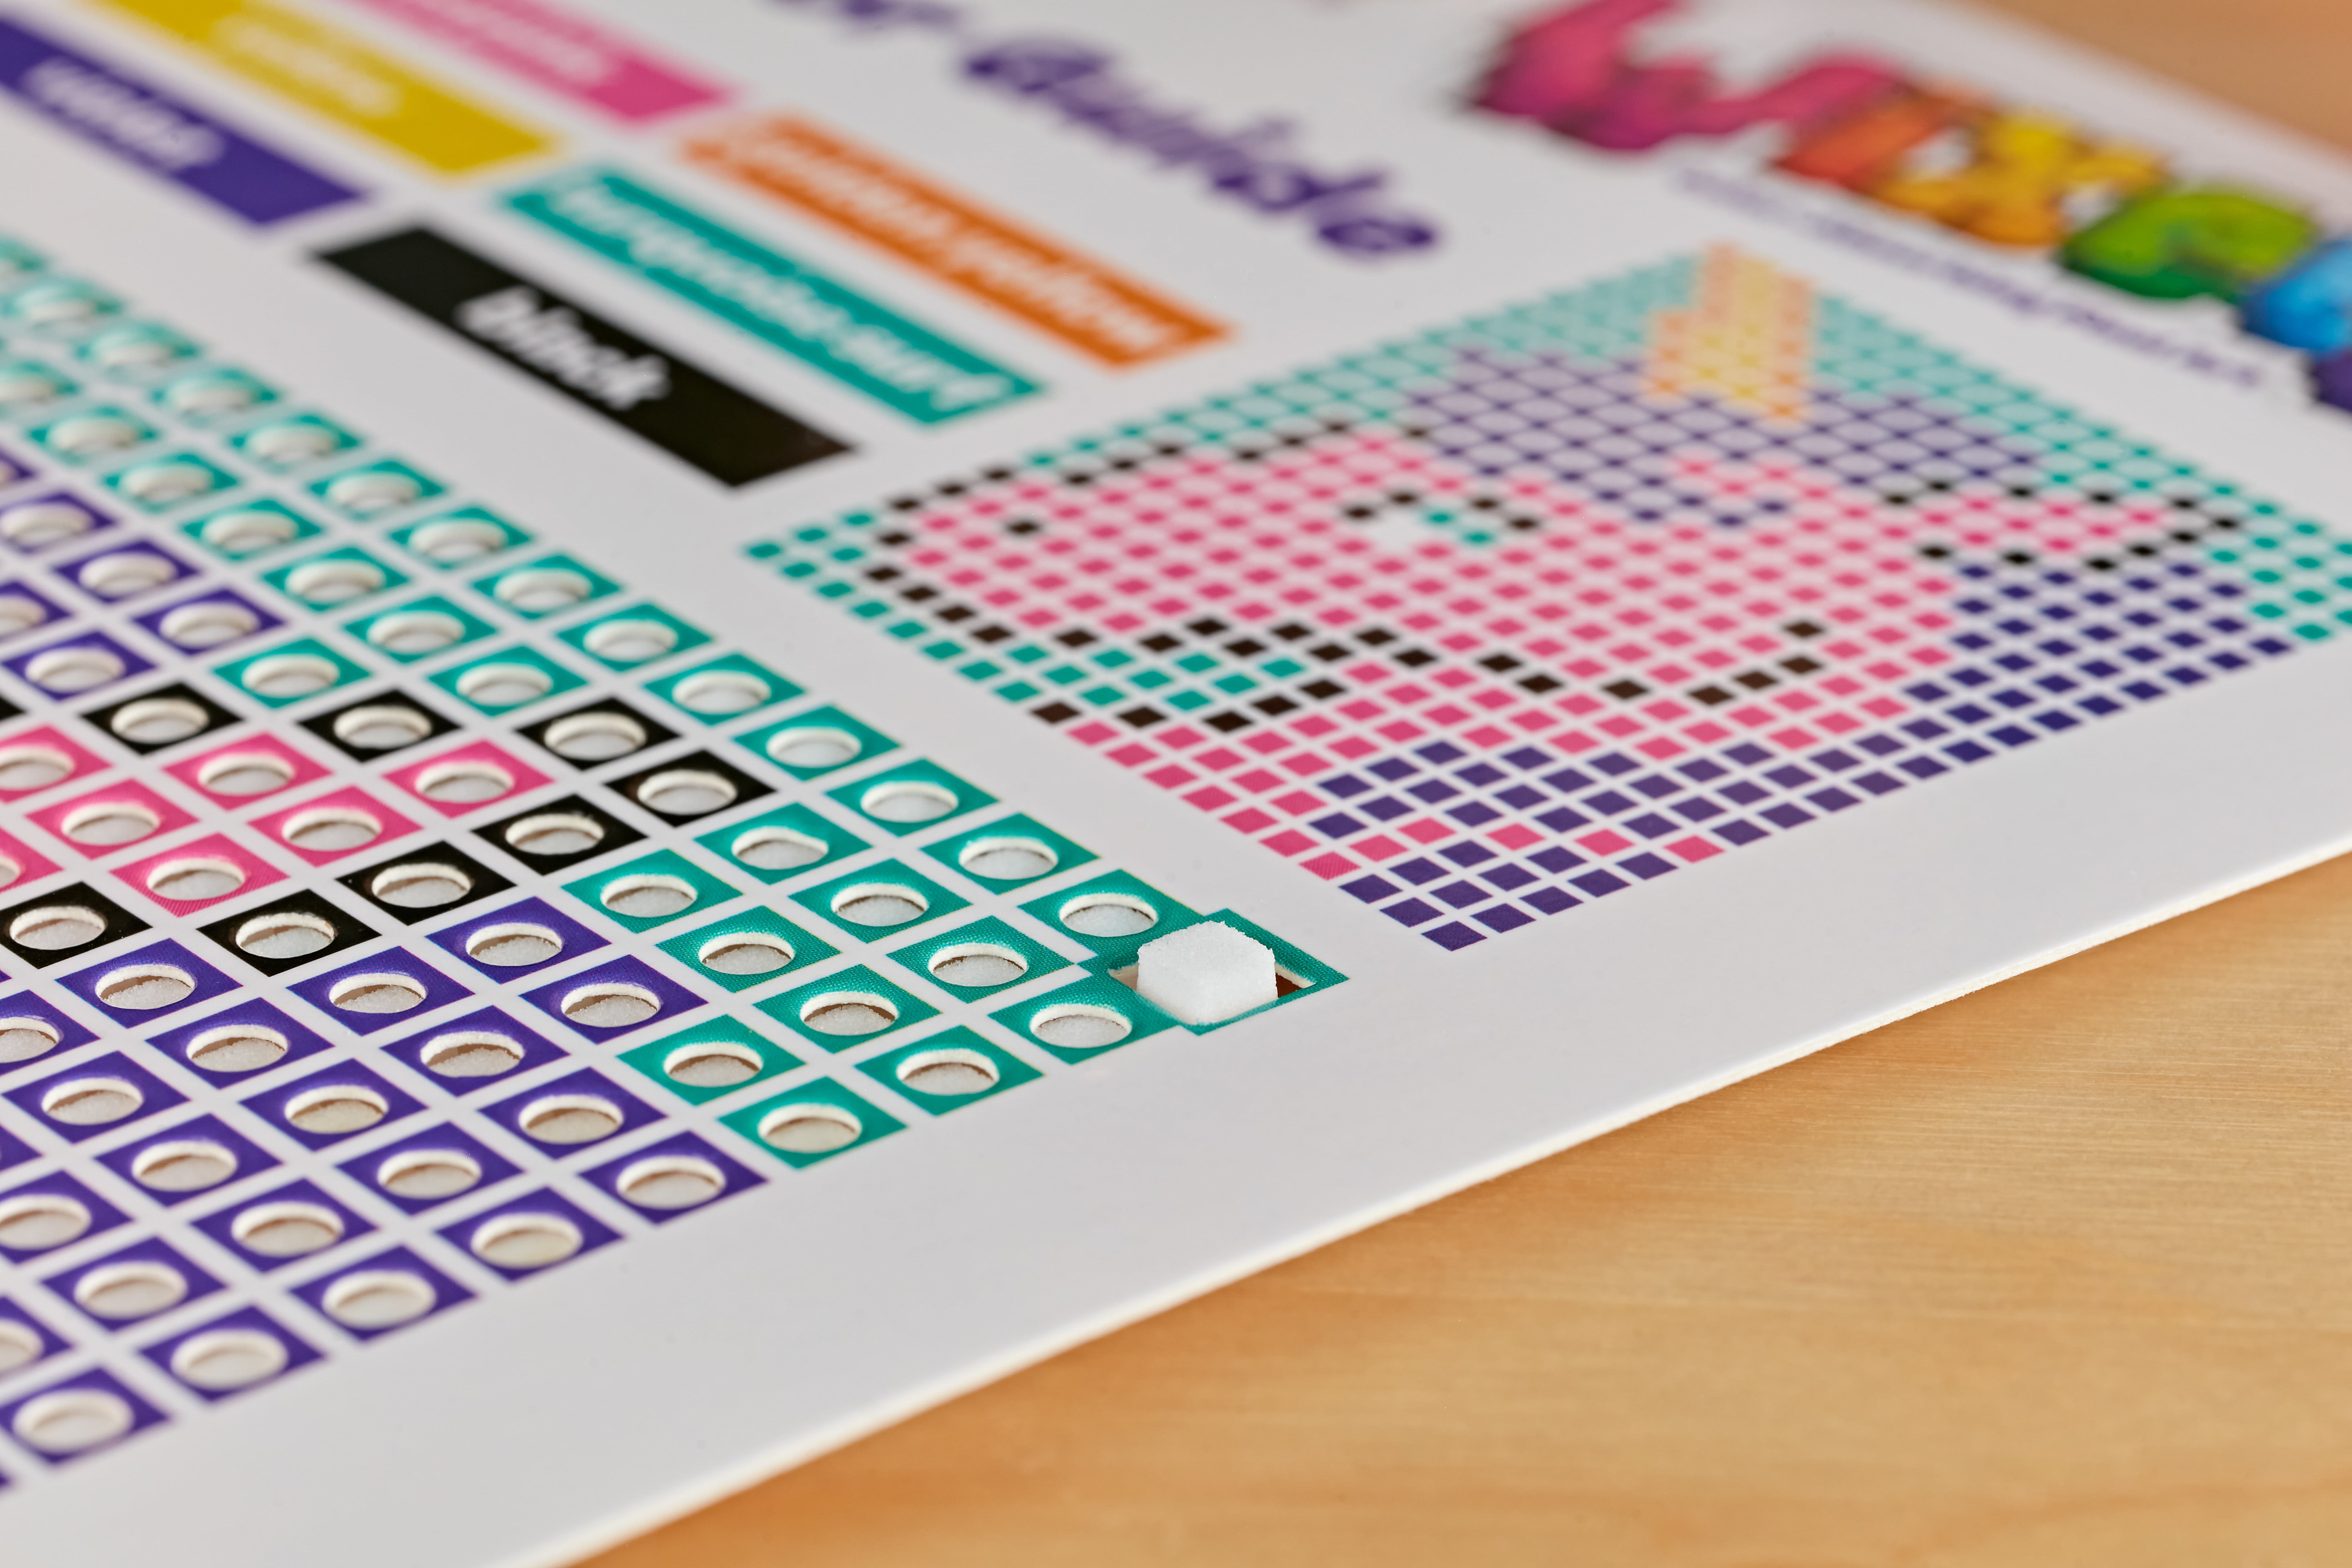 Crayola Wixels Unicorn Activity Kit, Pixel Art Coloring Set, Gift for Kids  